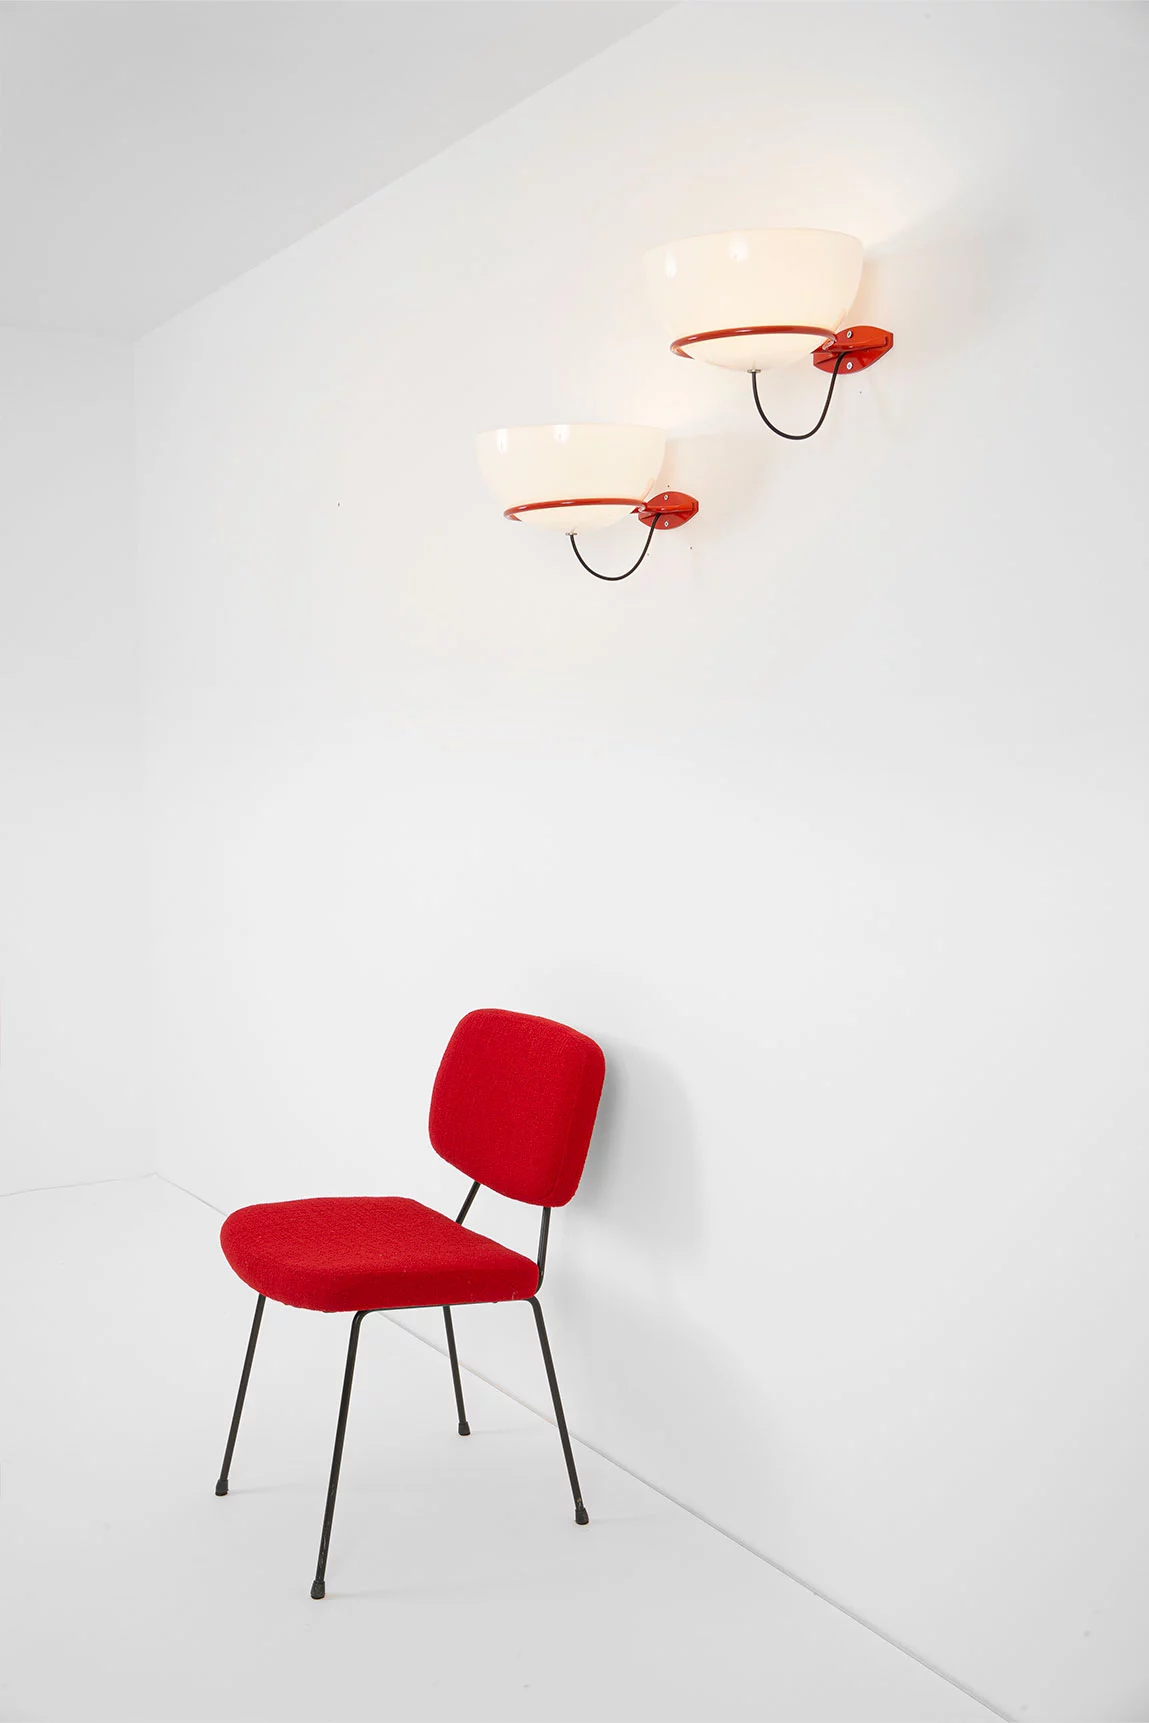 2/2 PX (red) - Gino Sarfatti - Wall light - Galerie kreo